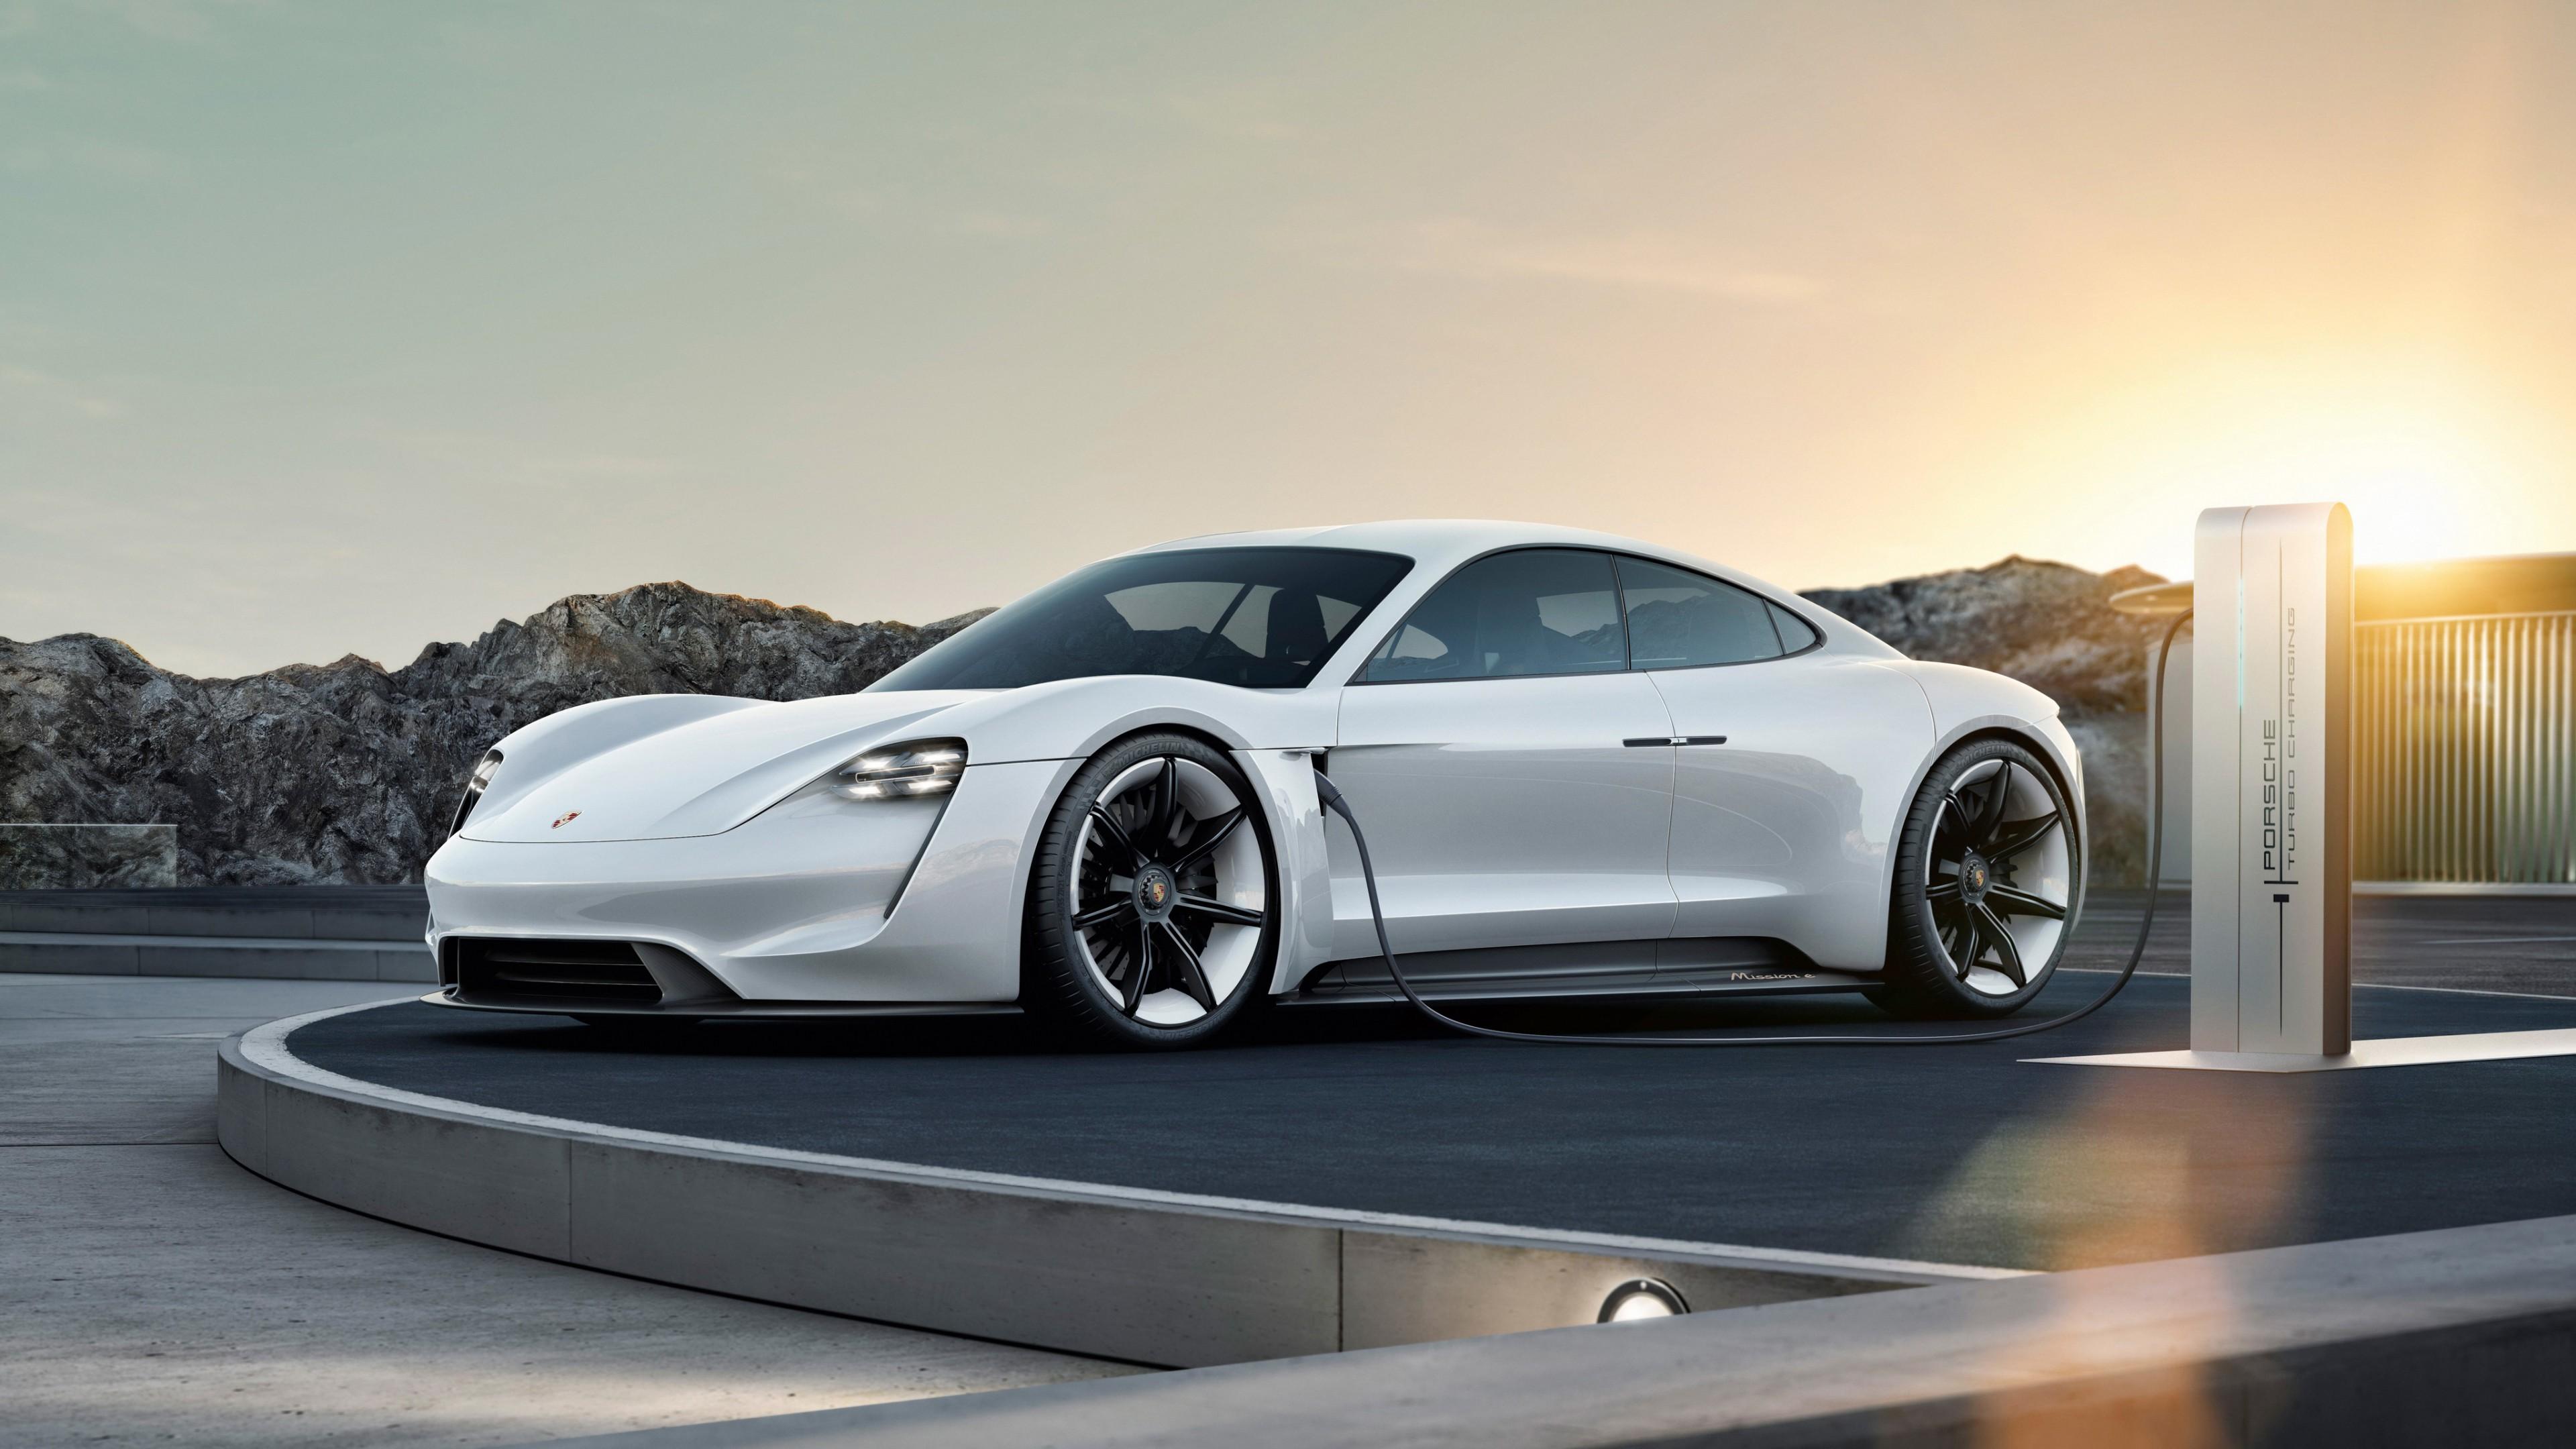 Free download Wallpaper Porsche Taycan Electric Car supercar 2020